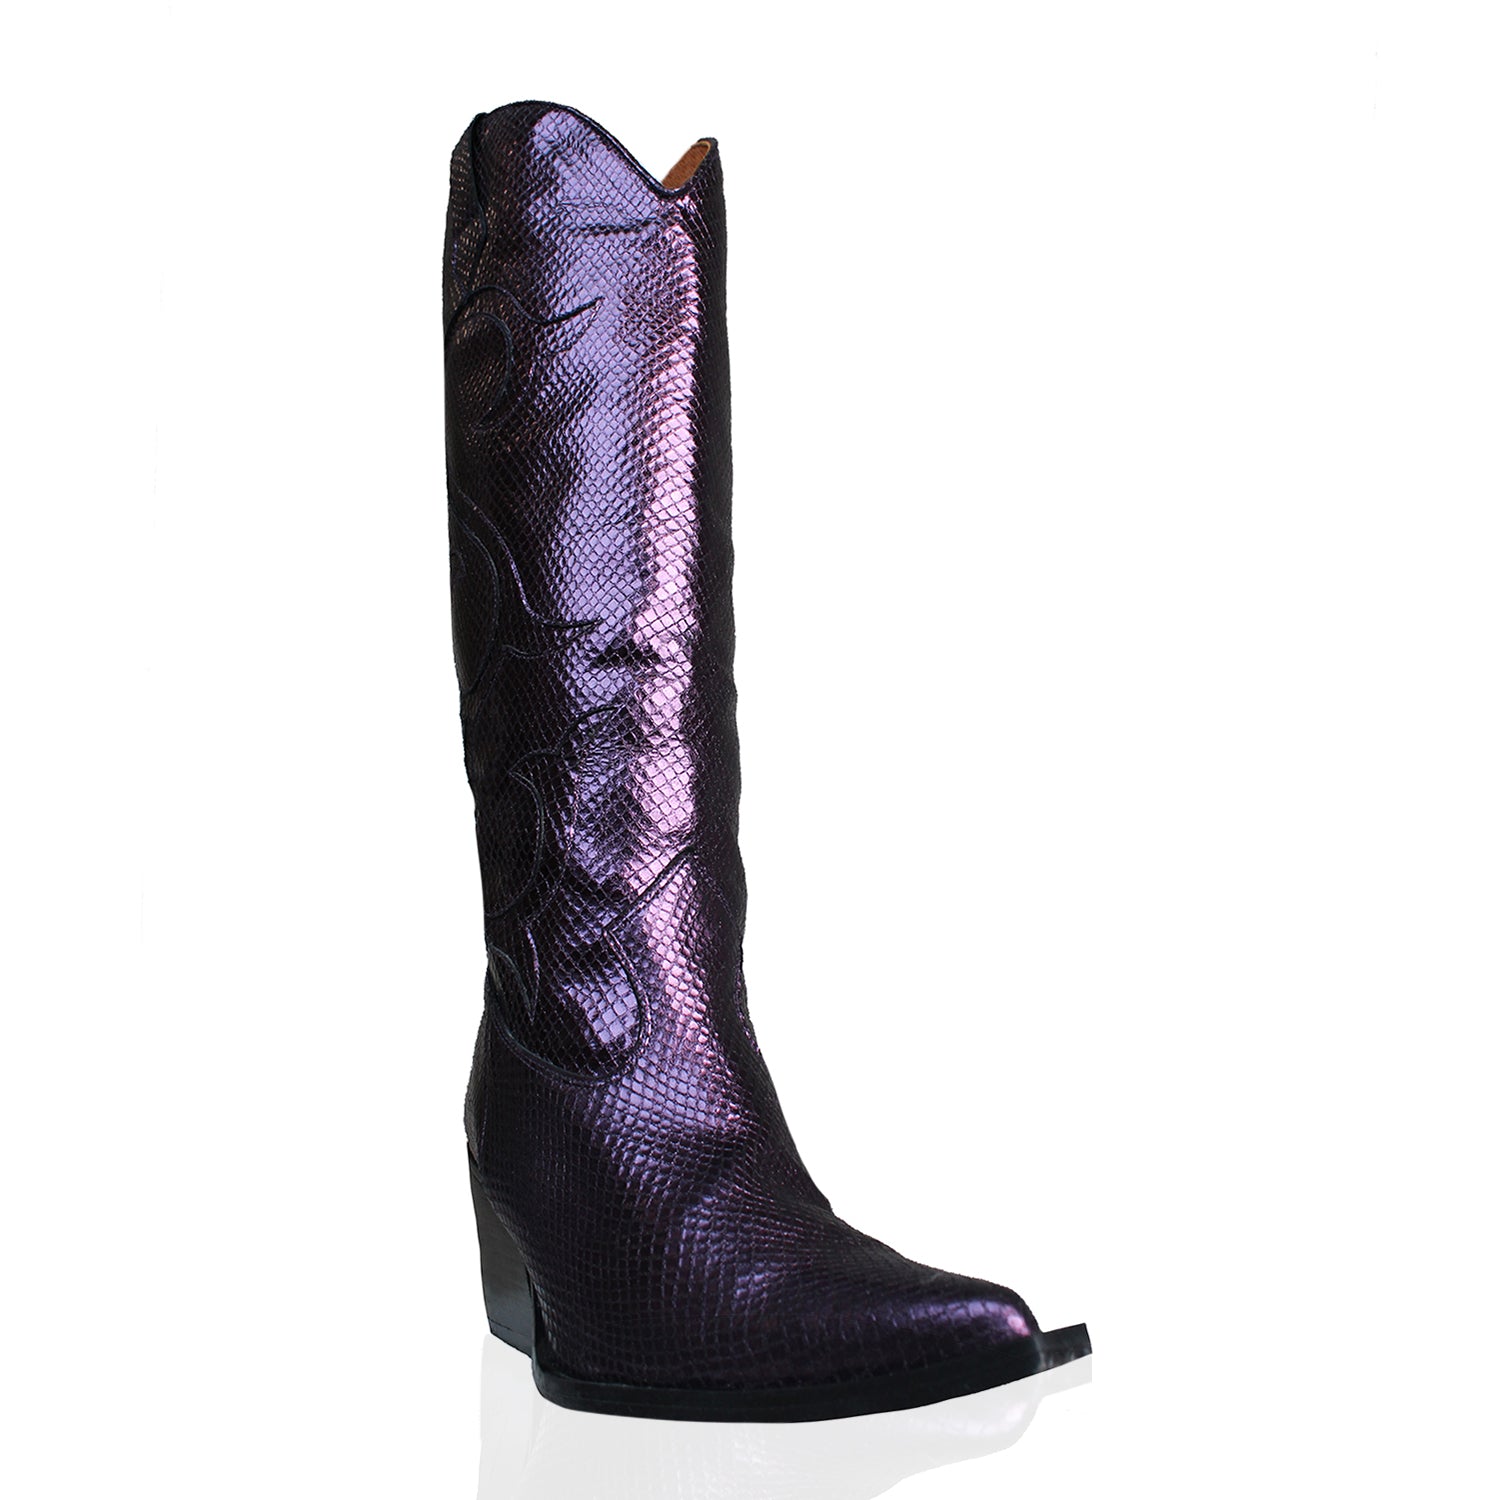 The Purple Cowboy Boot